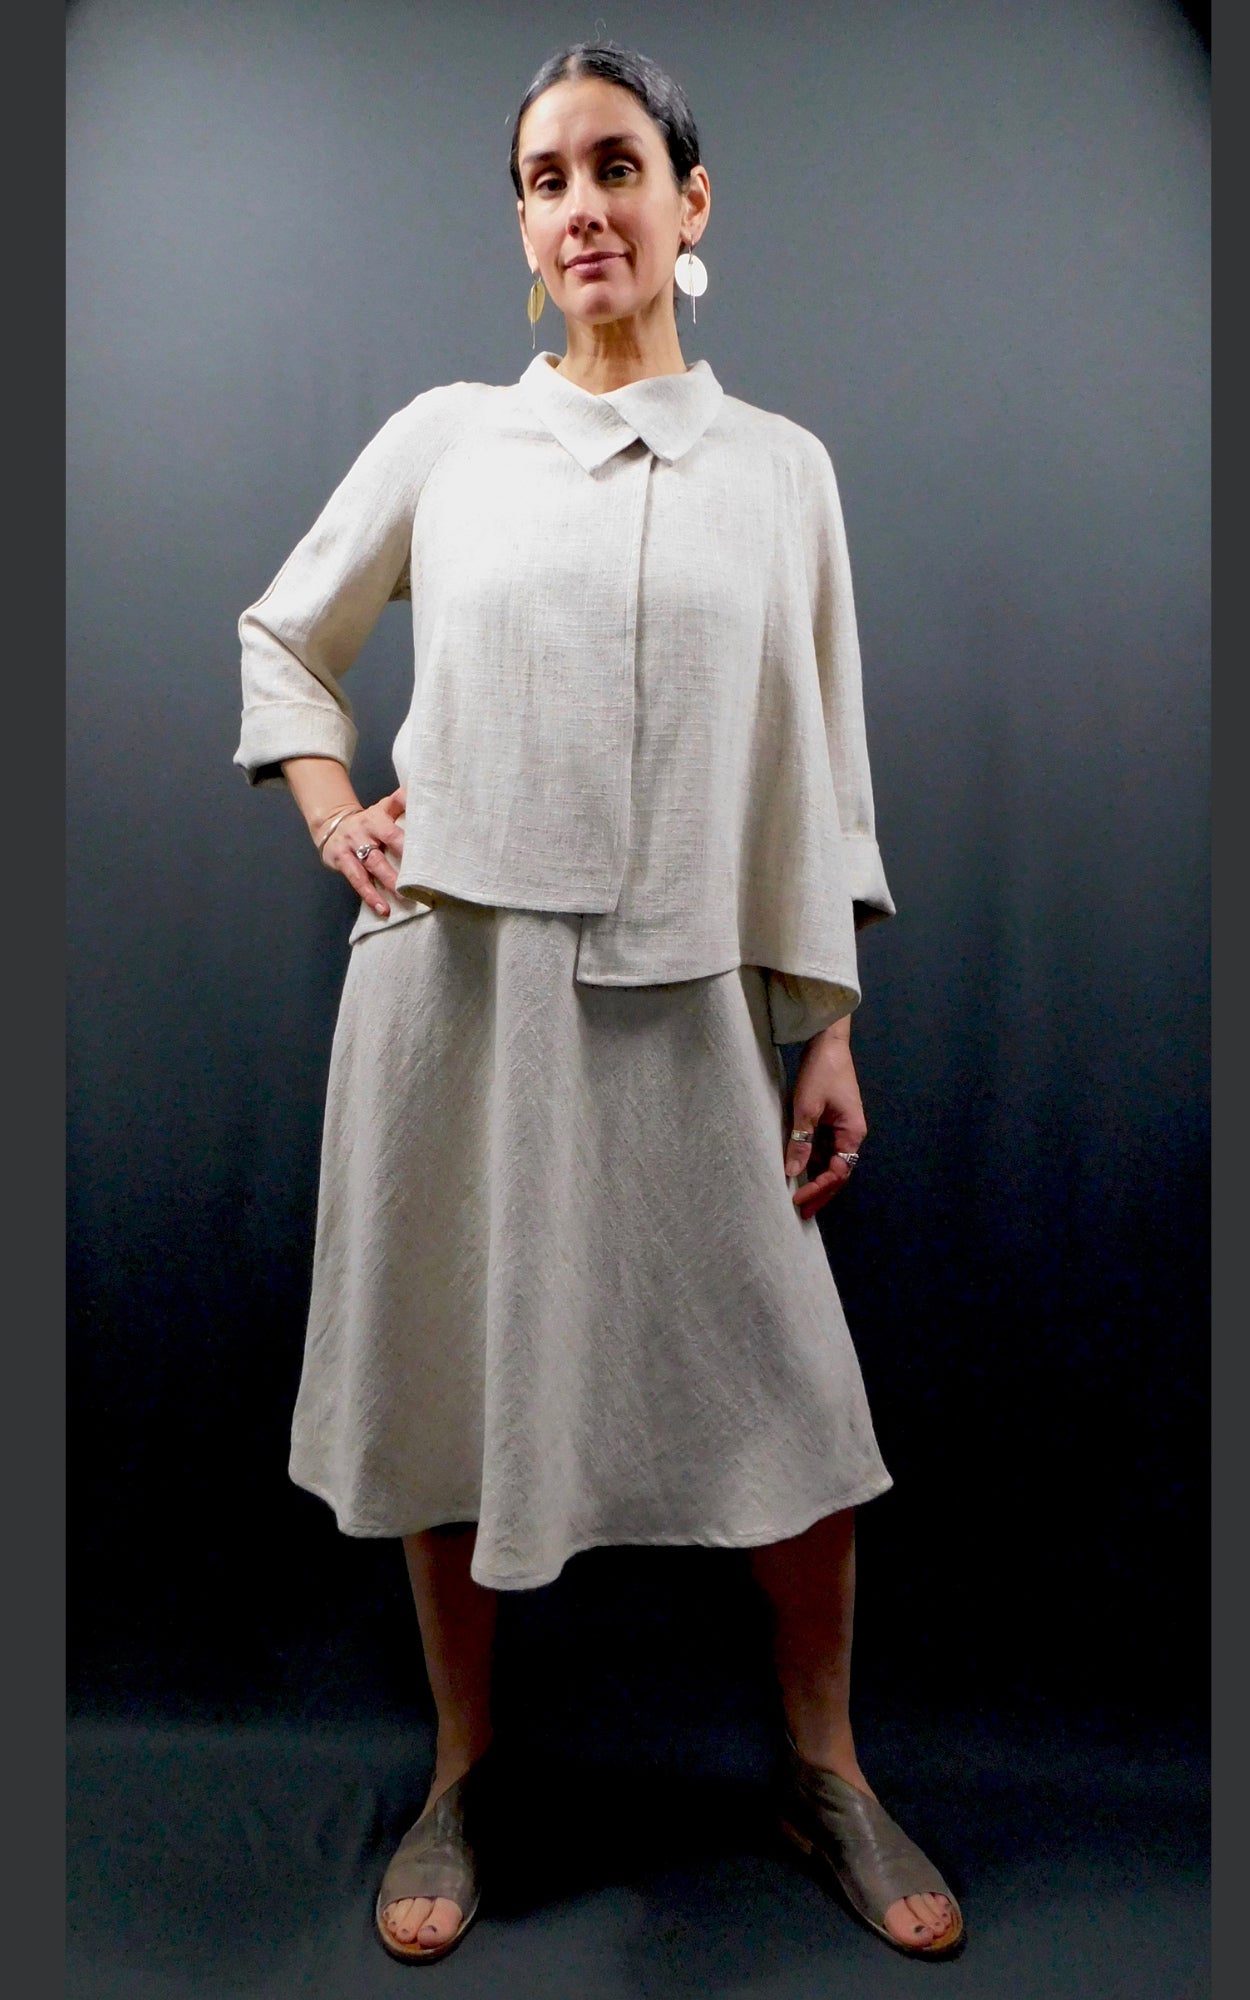 Women's V Neck Sleeveless Dress in Linen/Viscose Fabrics, Shift Dress,  Shell Button on Front Placket - China Women V Neck Linen Dress and  Sleeveless Shift Dress price